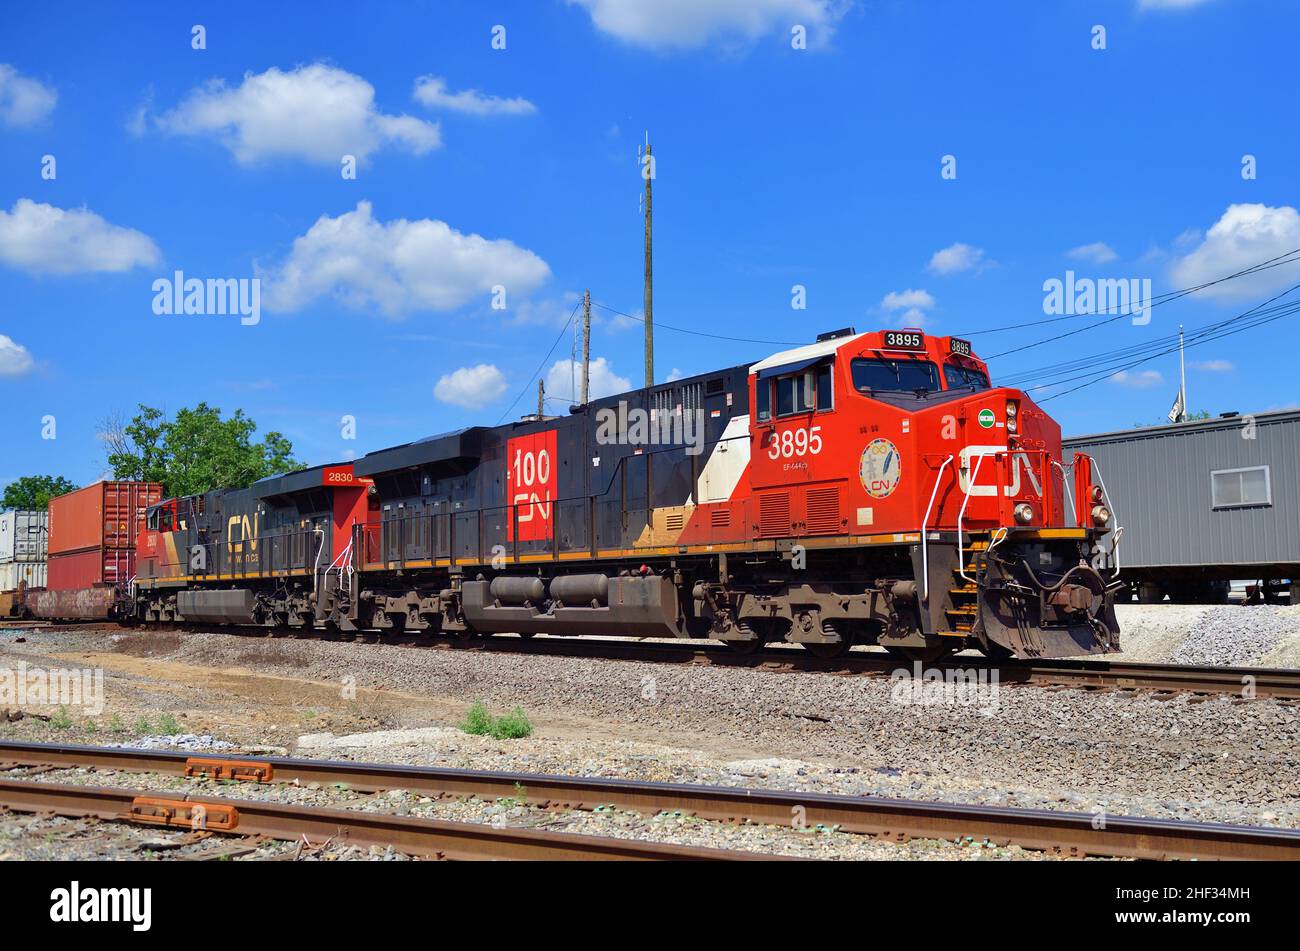 Bartlett, Illinois, USA. Ein Paar Canadian National Railway-Lokomotiven führt einen intermodalen Güterzug durch Spaulding Junction. Stockfoto